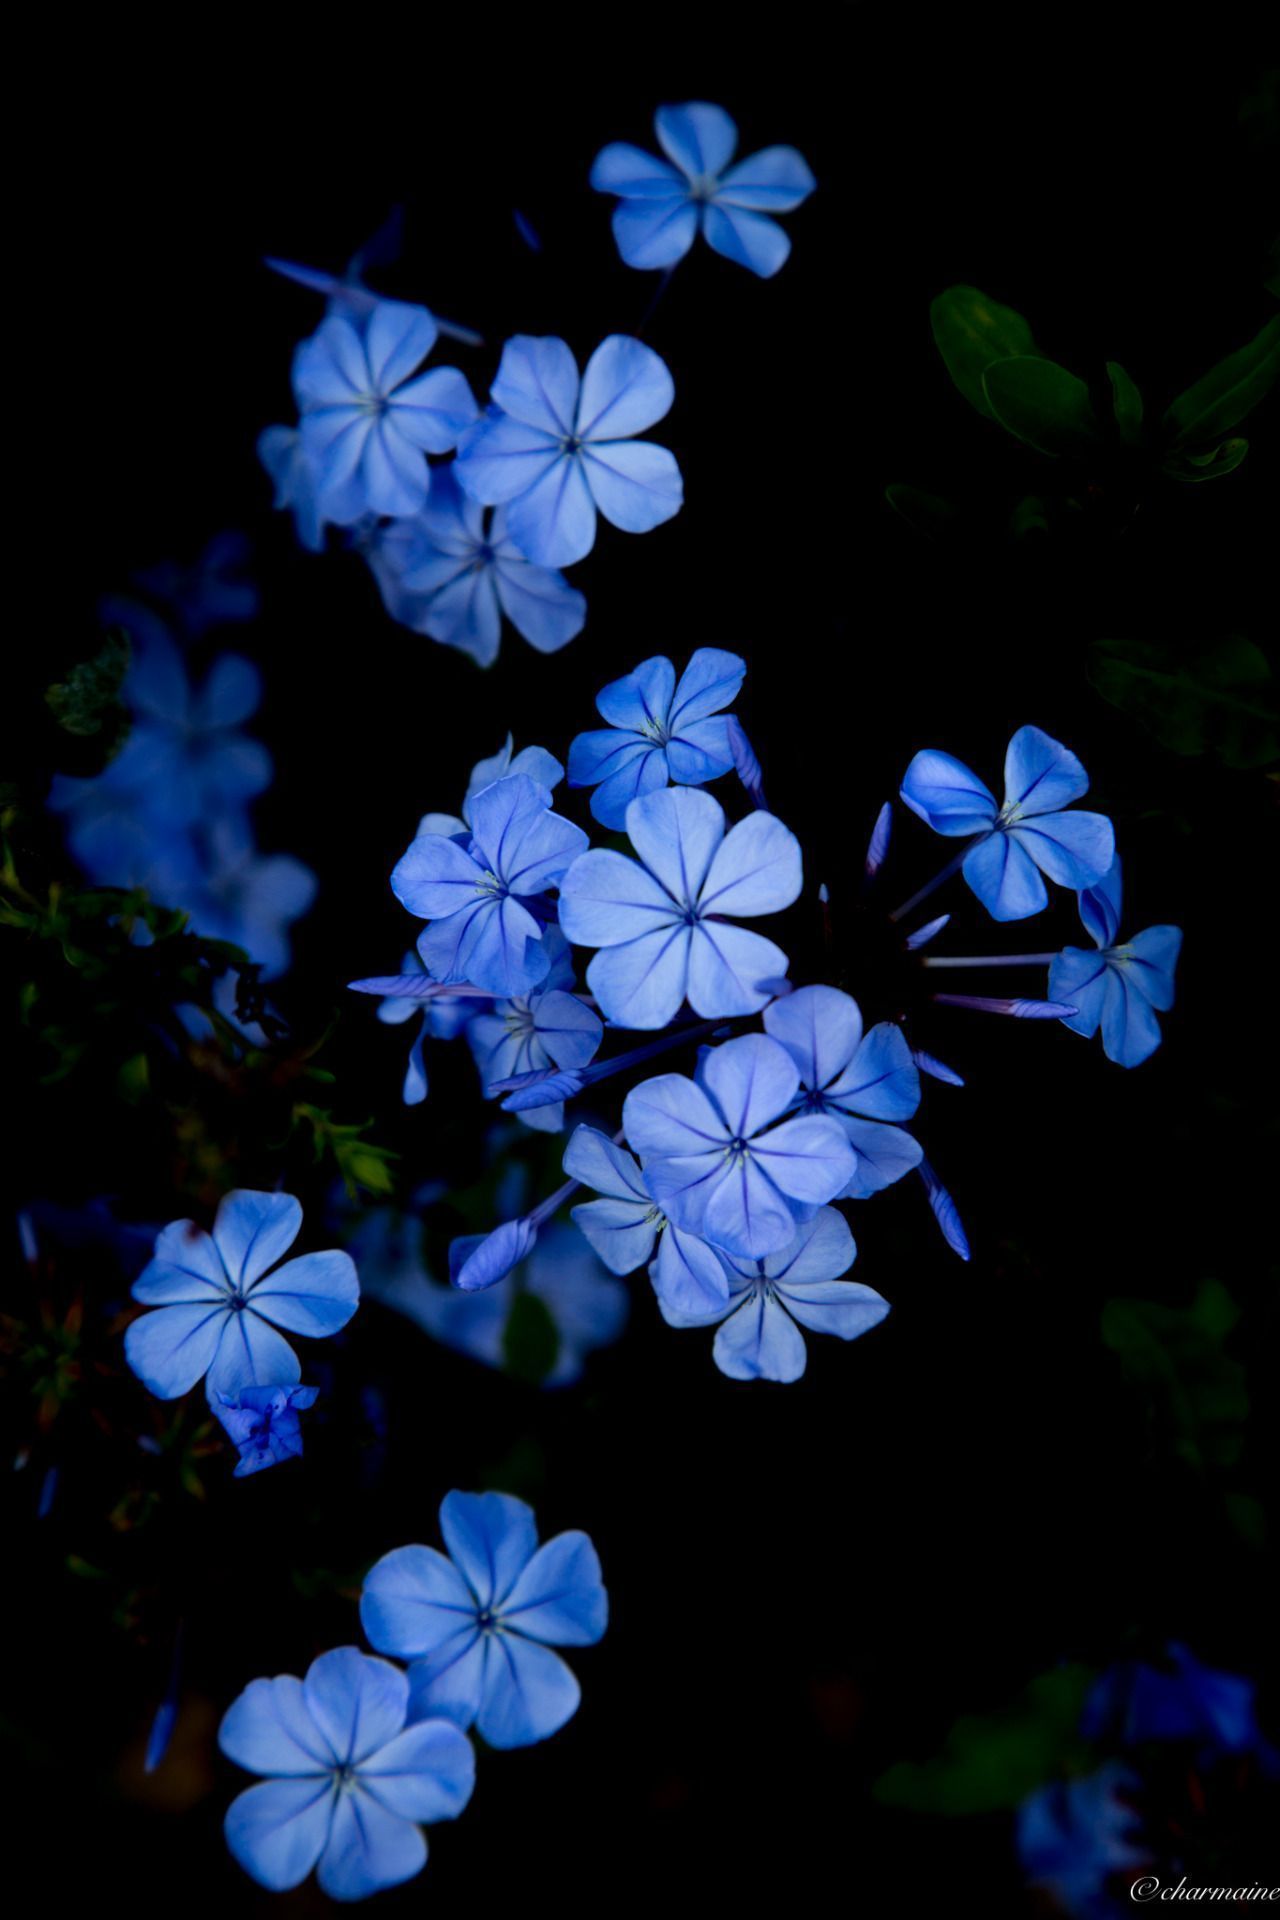 Blue flowers on a black background - Dark blue